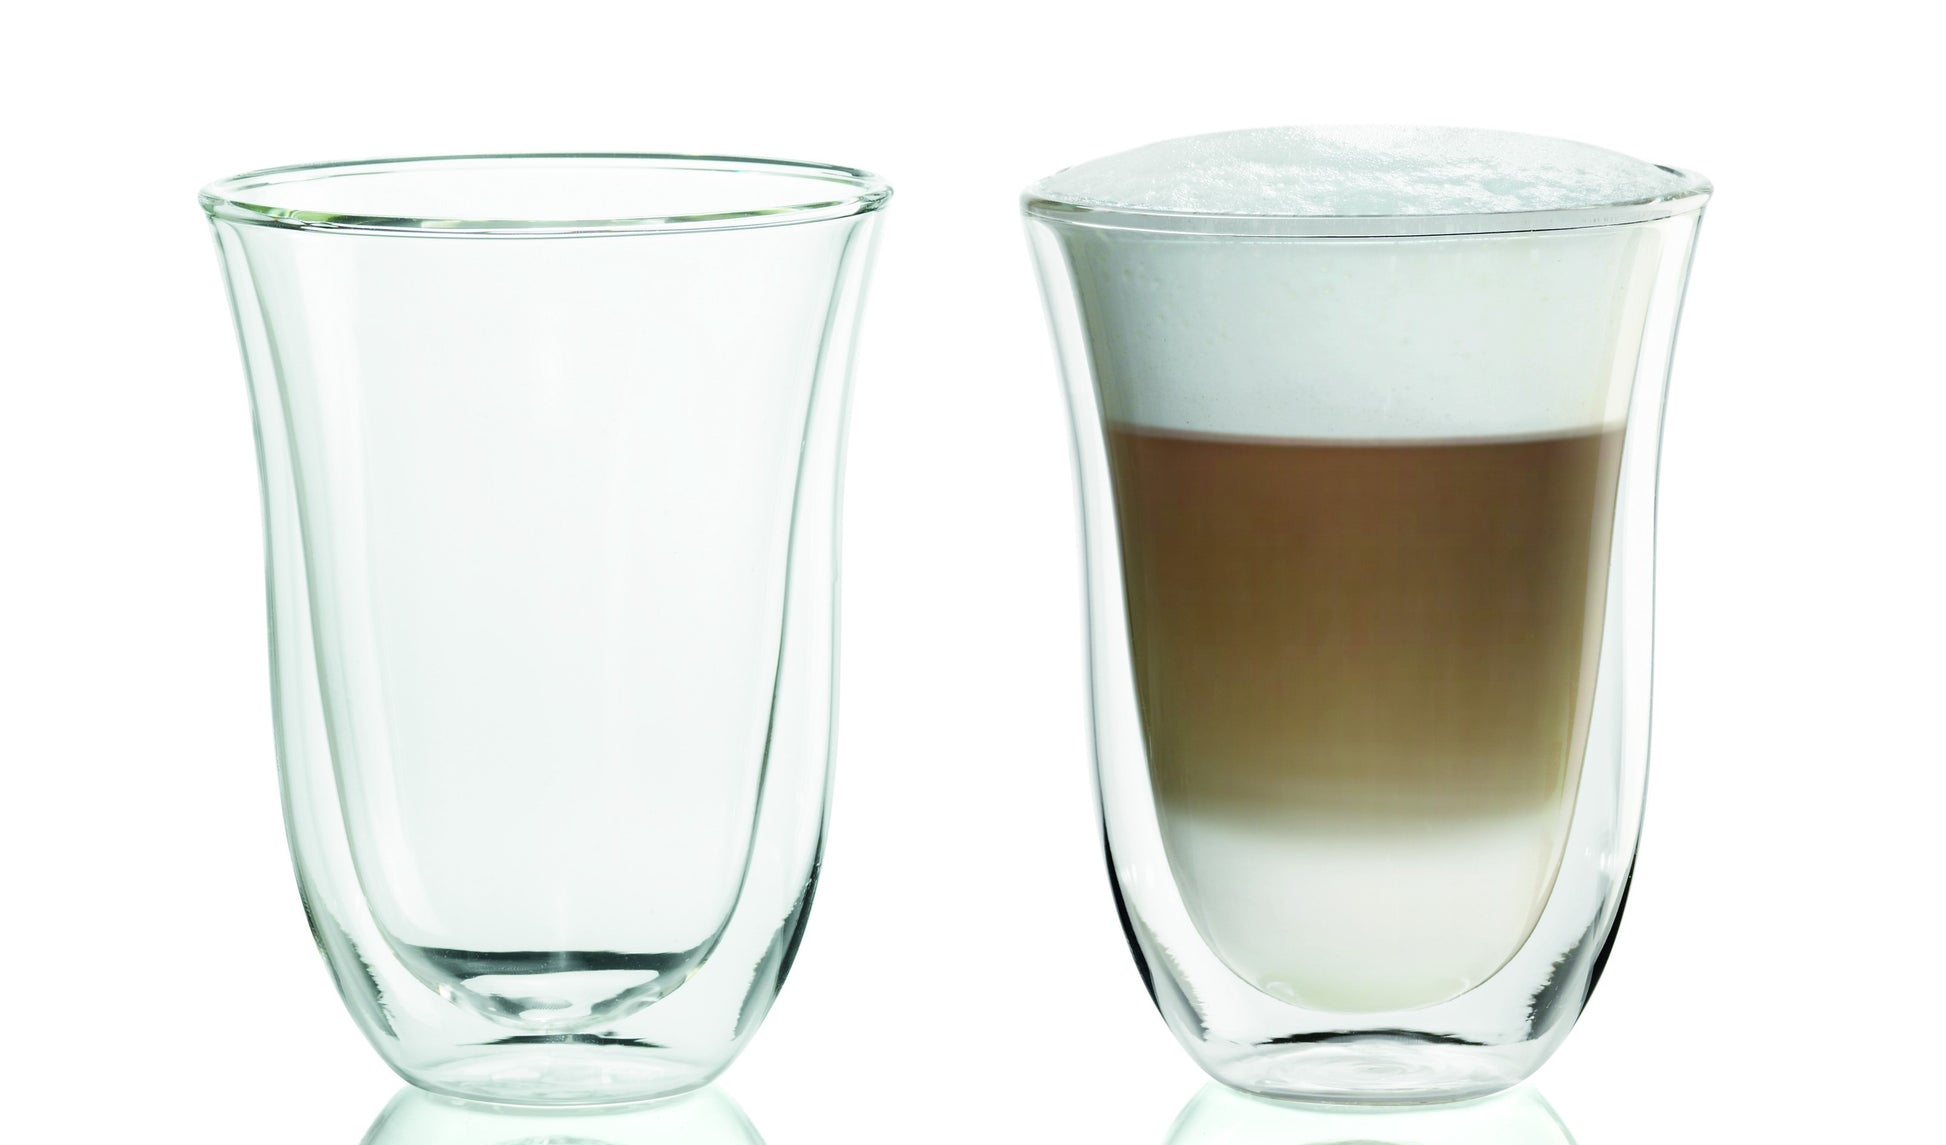 De'Longhi Espresso Cups, Double Wall Thermal Glasses, 2 oz, Set of 2 - -  Espresso Machine Experts